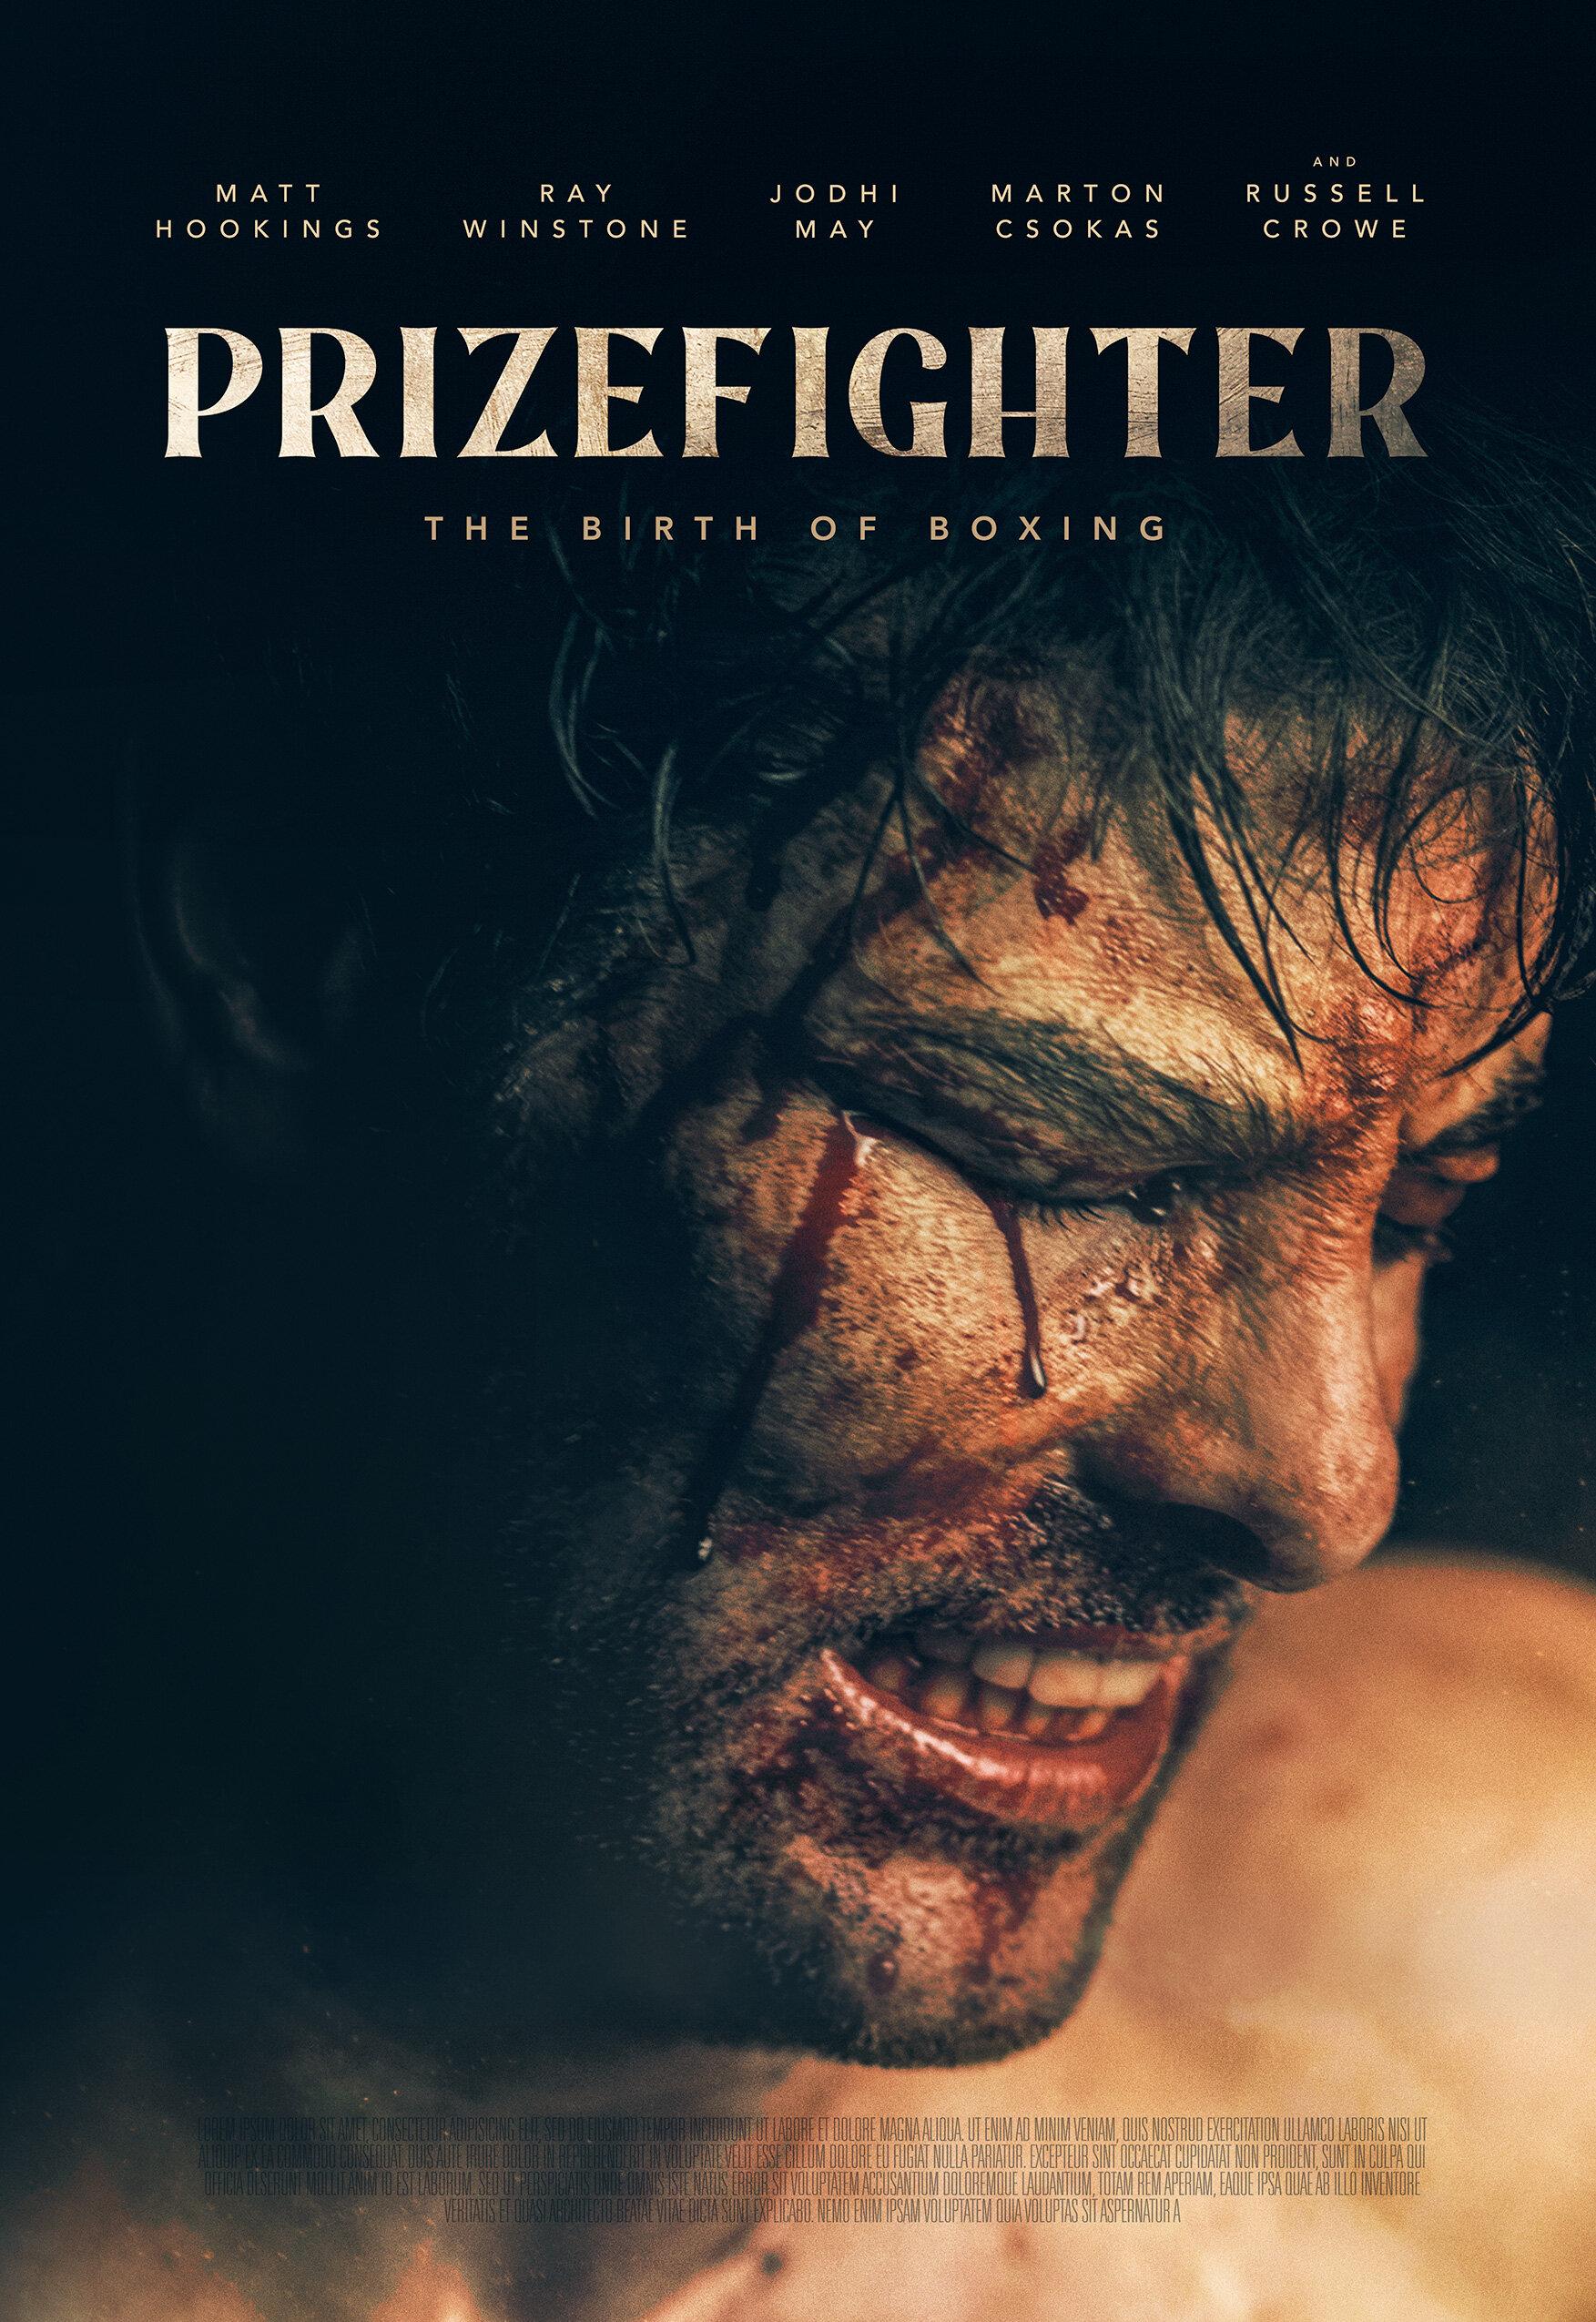 Постер фильма Боец: Король ринга | Prizefighter: The Life of Jem Belcher